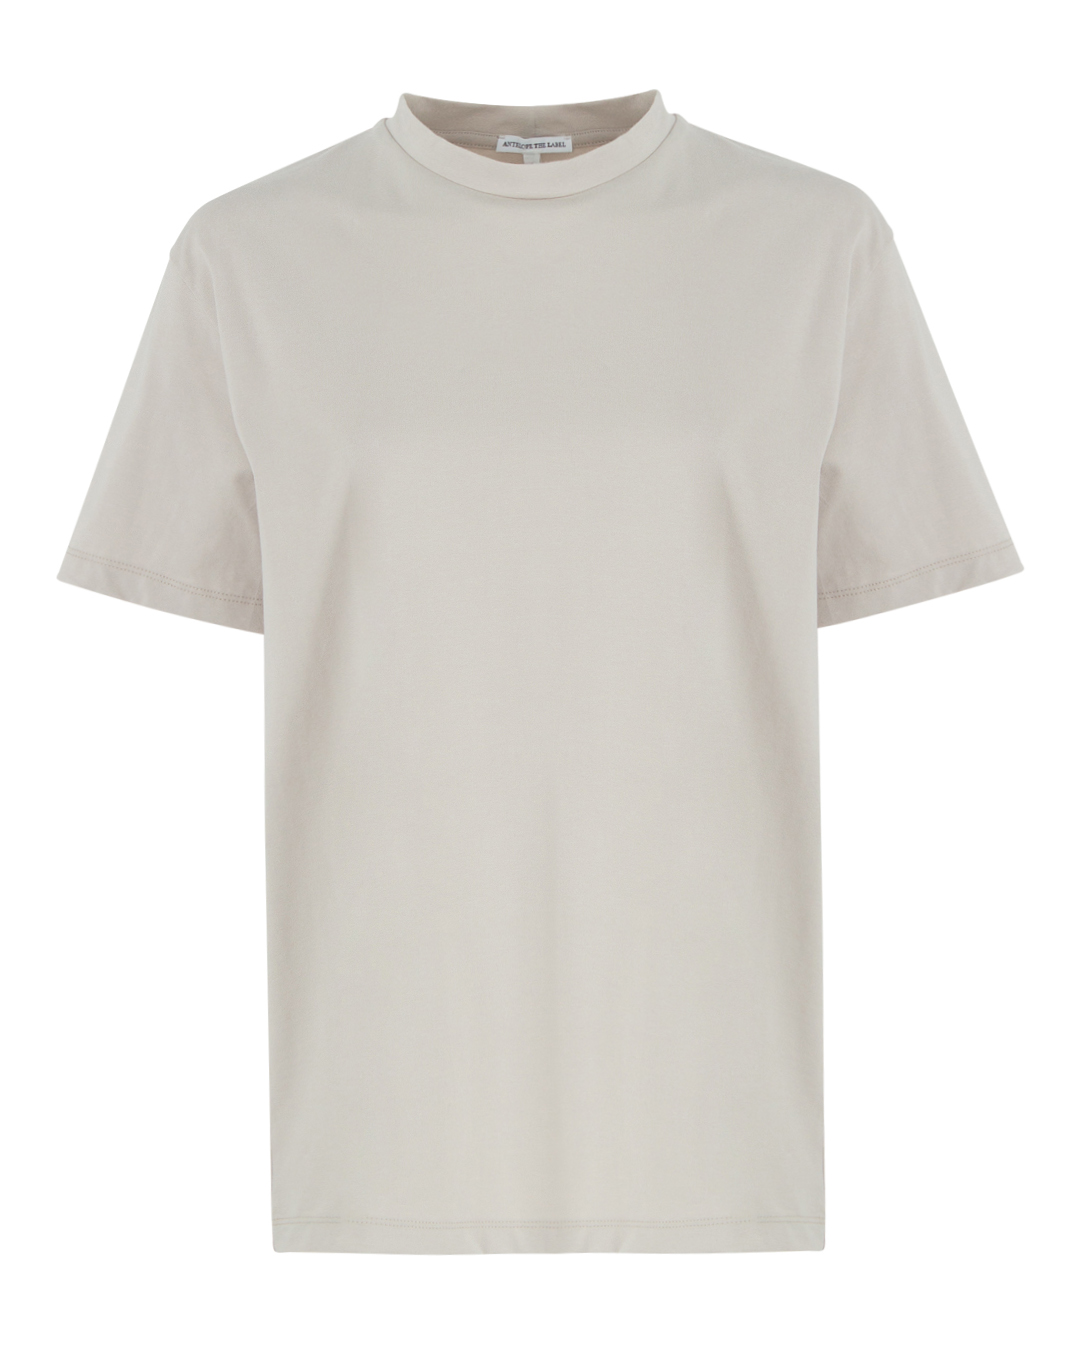 хлопковая футболка ANTELOPE THE LABEL T1.LIGHT GREY серый xs, размер xs